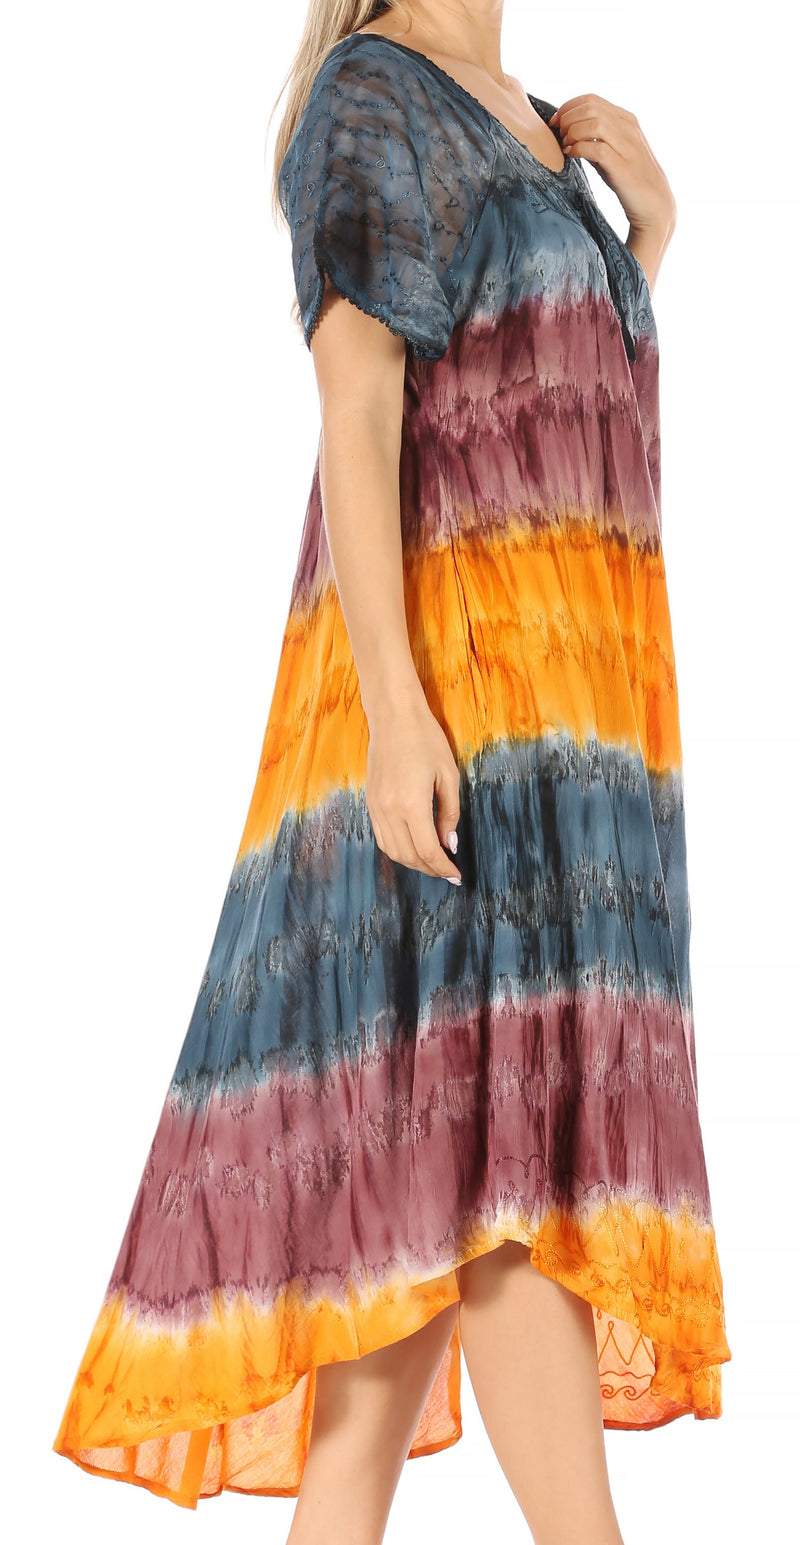 Sakkas Sula Tie-Dye Wide Neck Embroidered Boho Sundress Caftan Cover Up